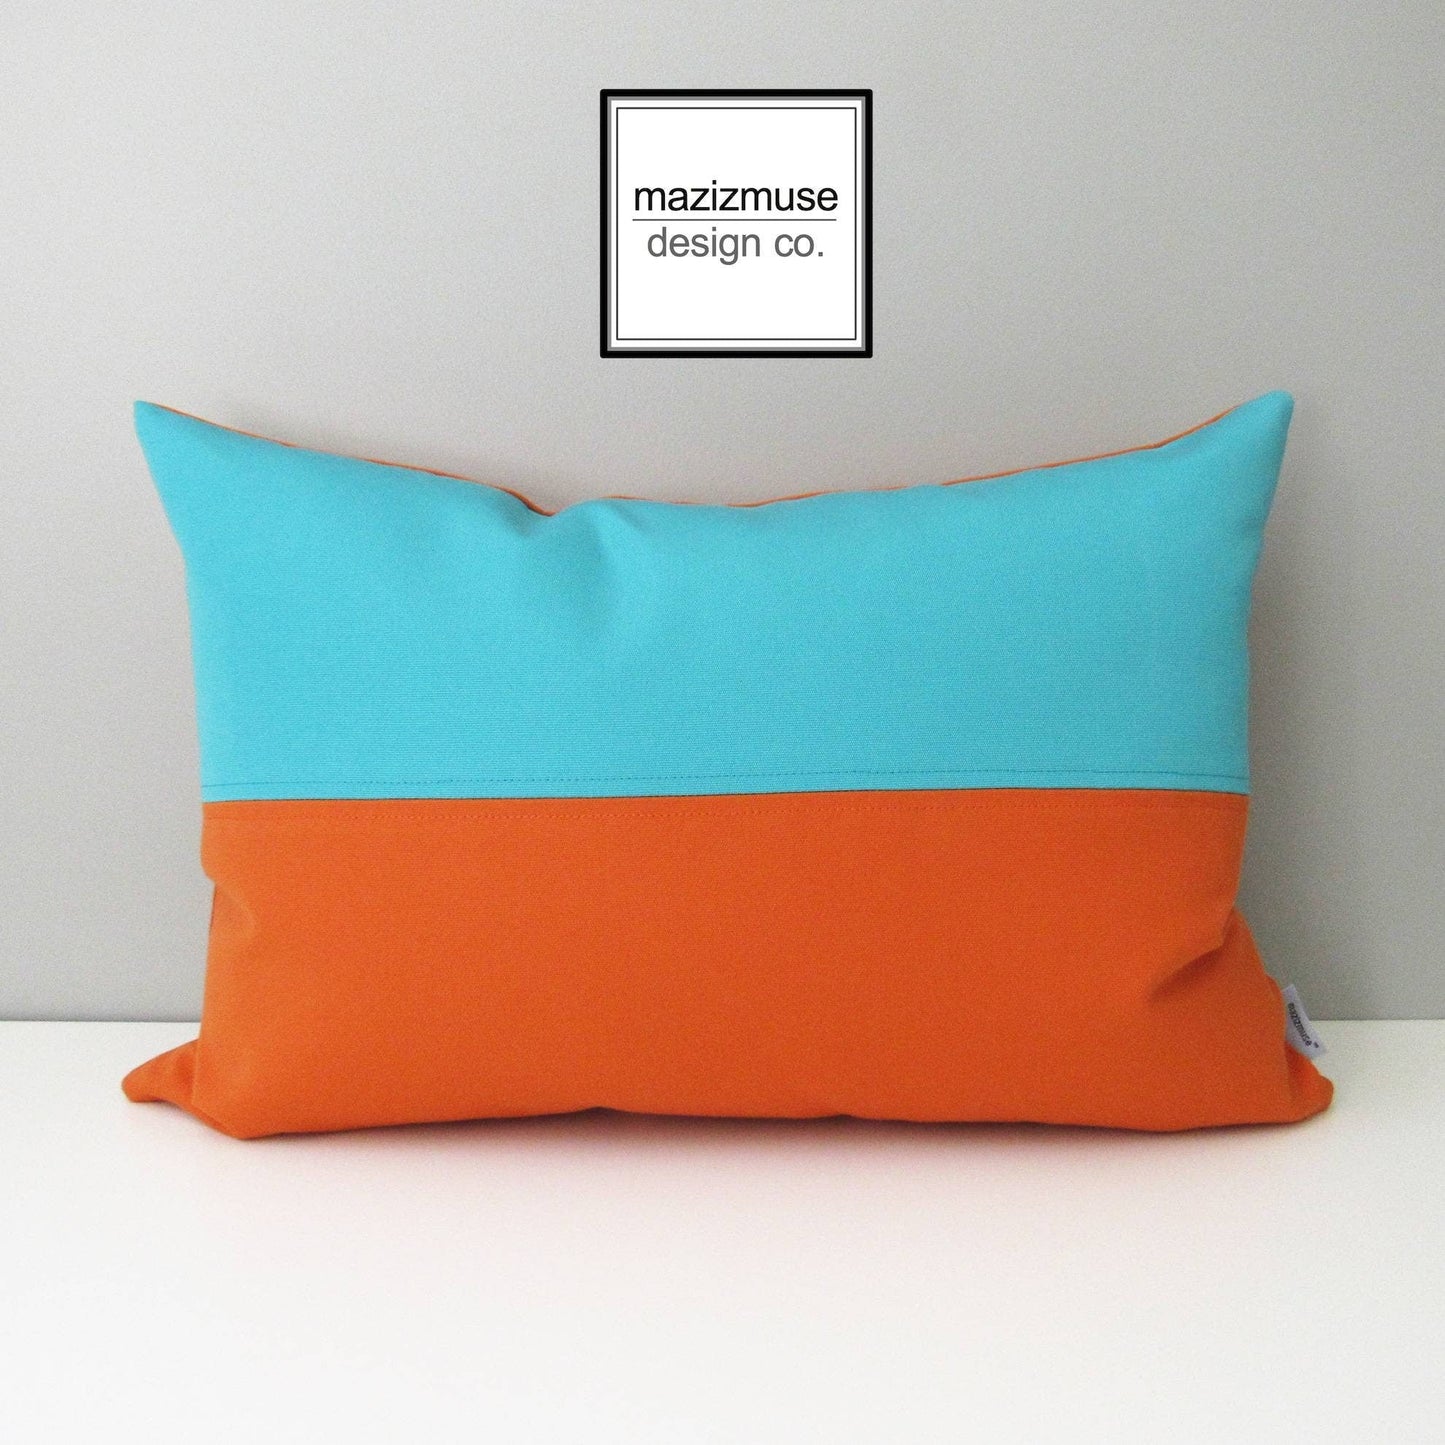 Blue Sunbrella Outdoor Pillow Cover, Decorative Cushion Cover